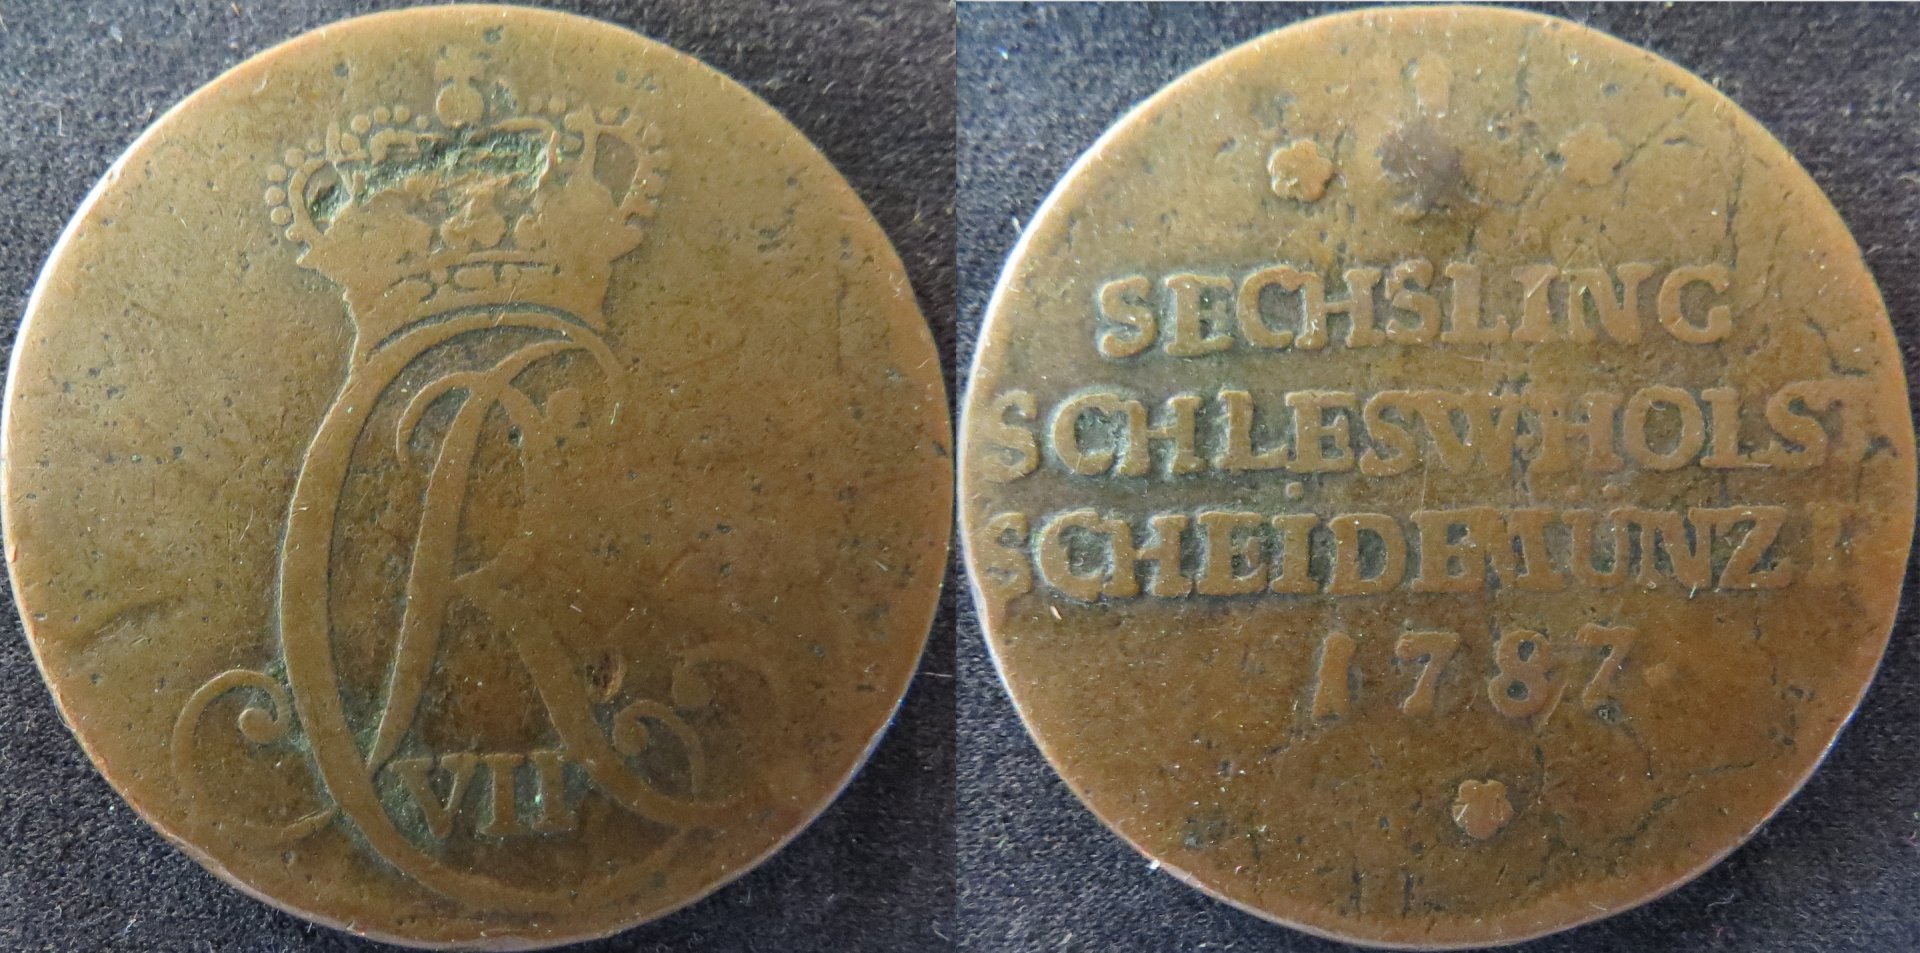 Schleswig-Holstein 1 Sechsling 1787 copy.jpeg